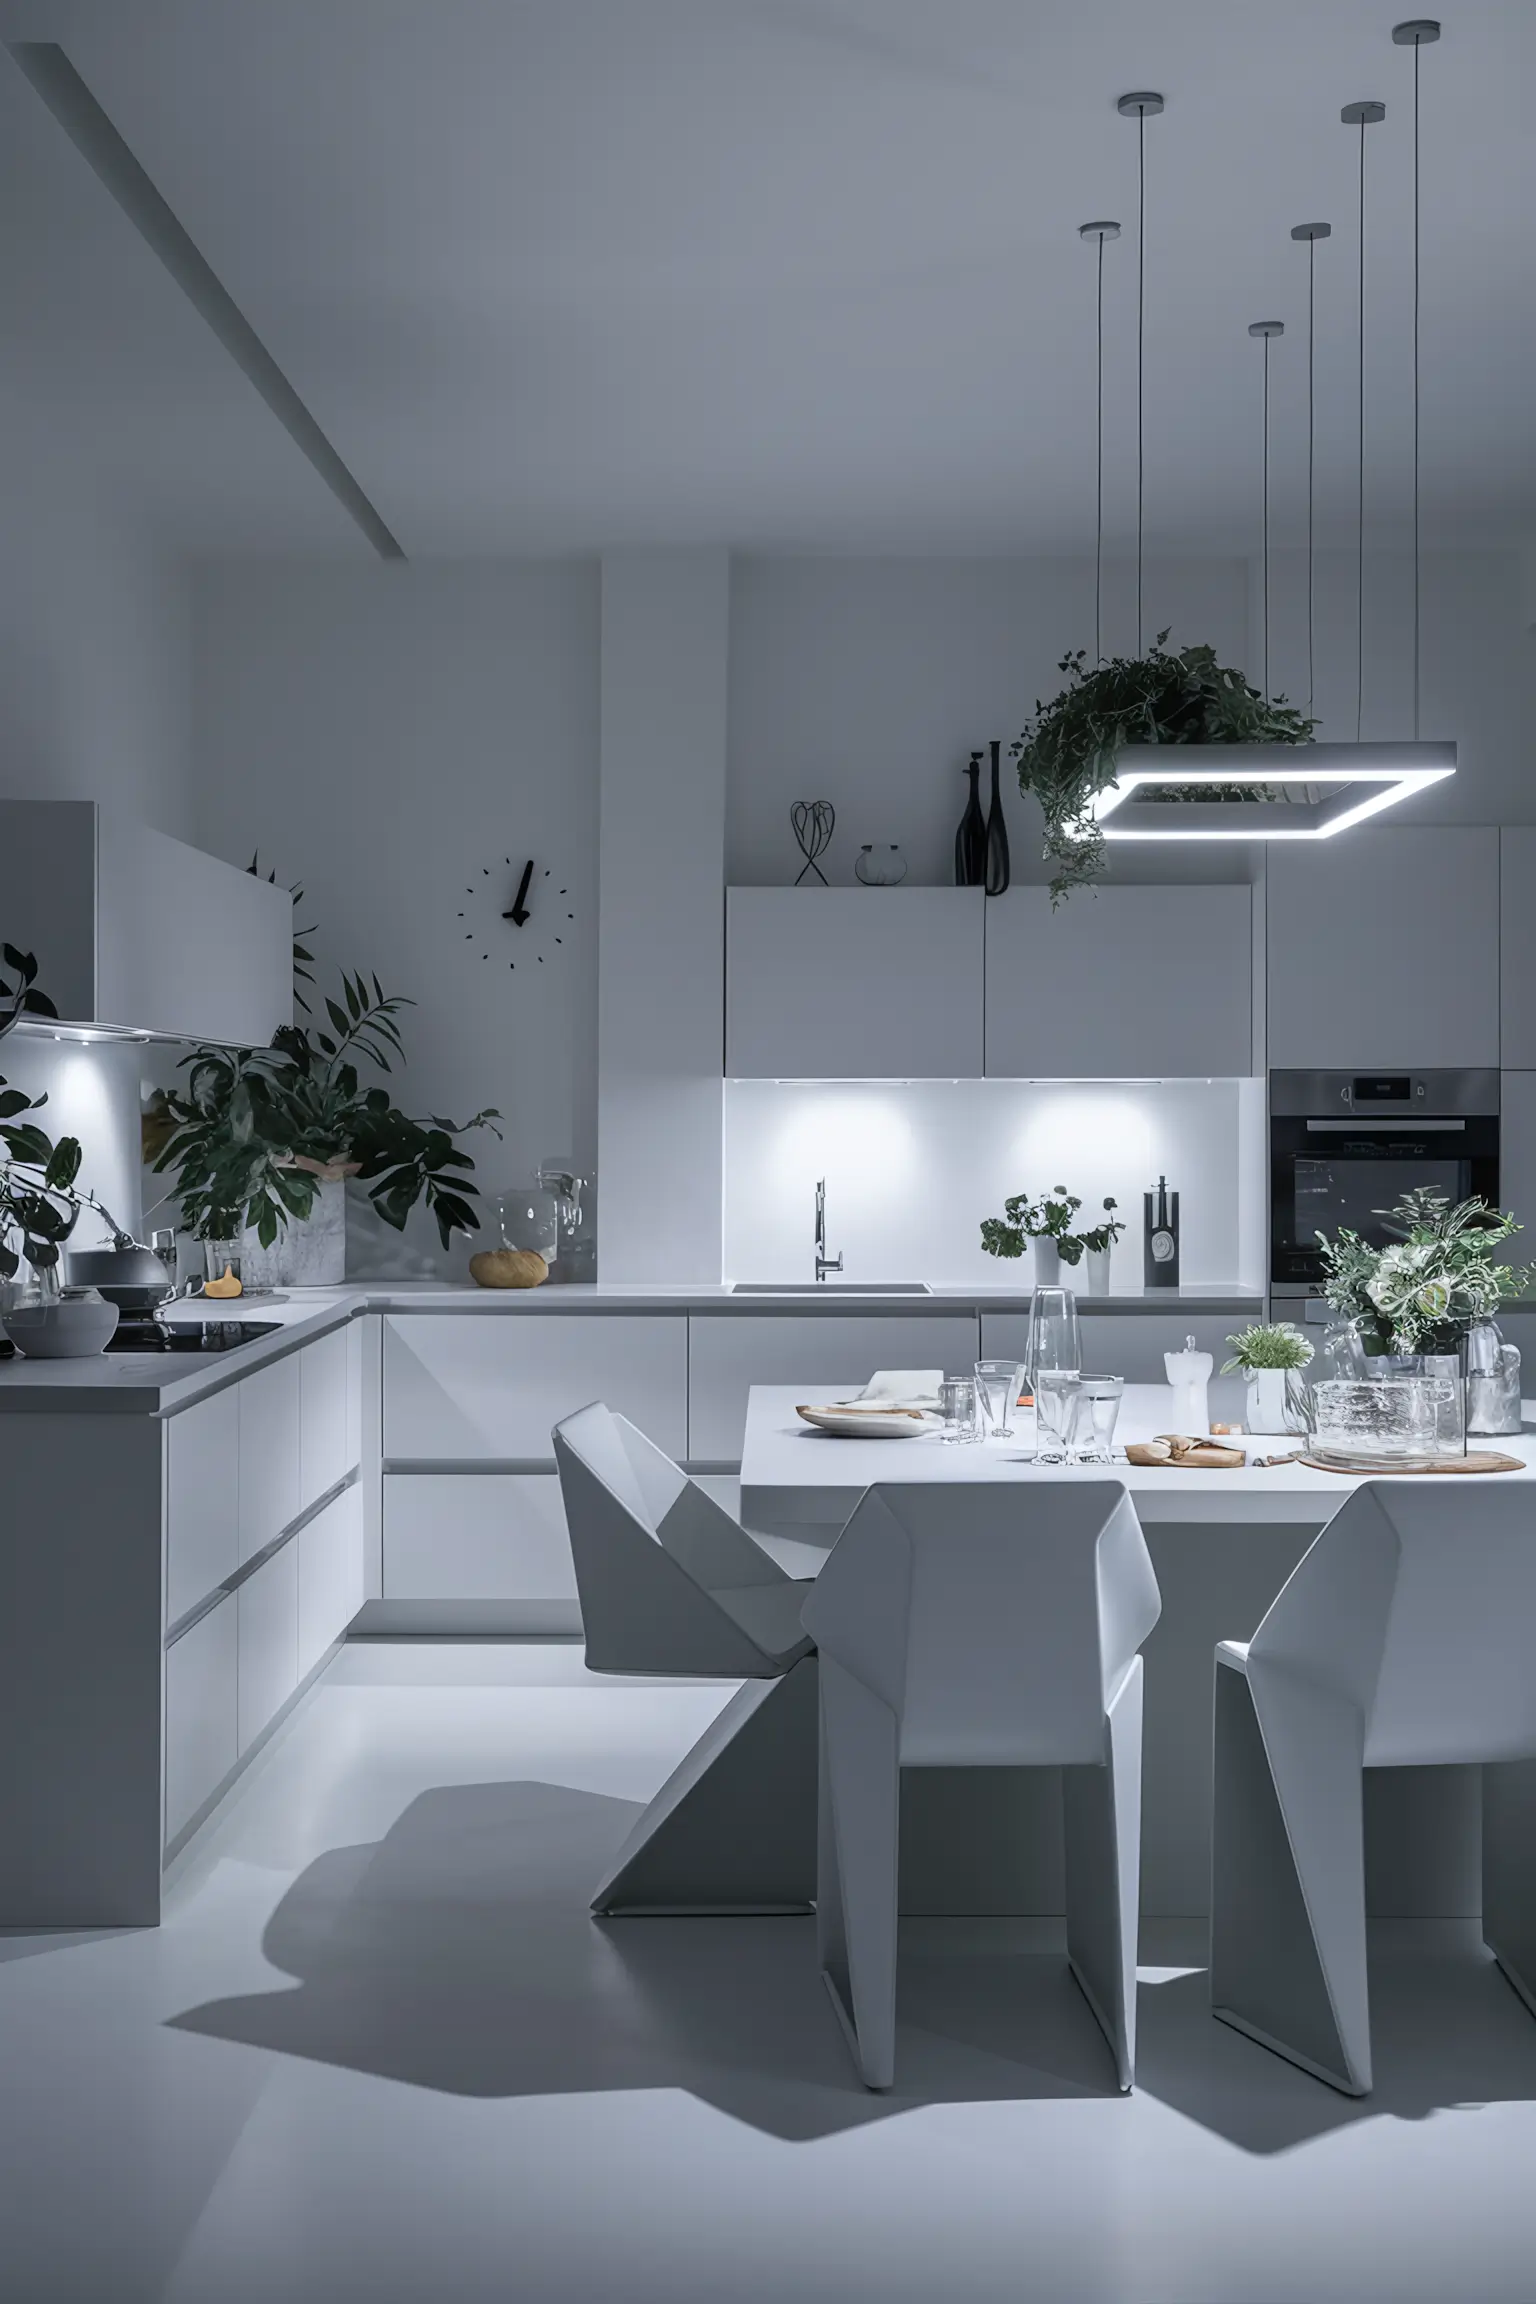 Minimalistic white kitchen with stylish decor, plants, and modern lighting.